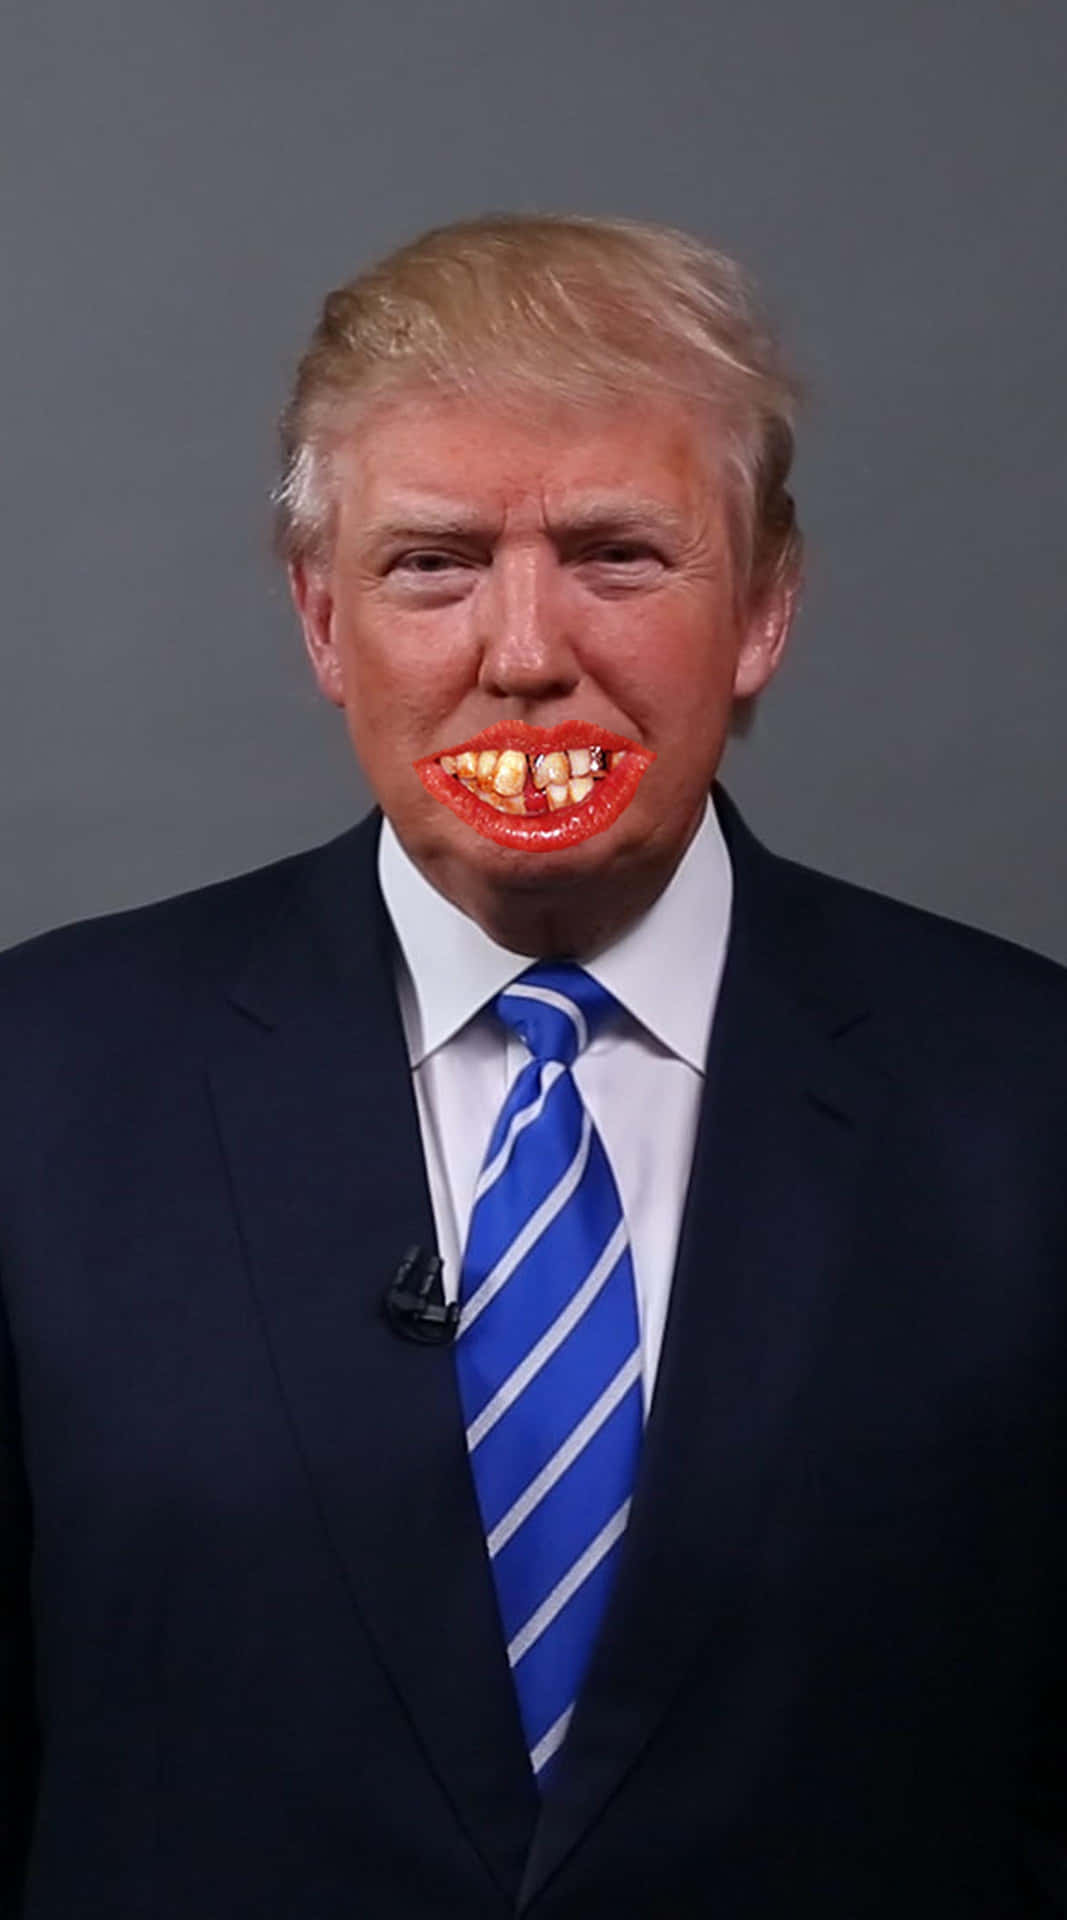 Funny Face Donald Trump Picture